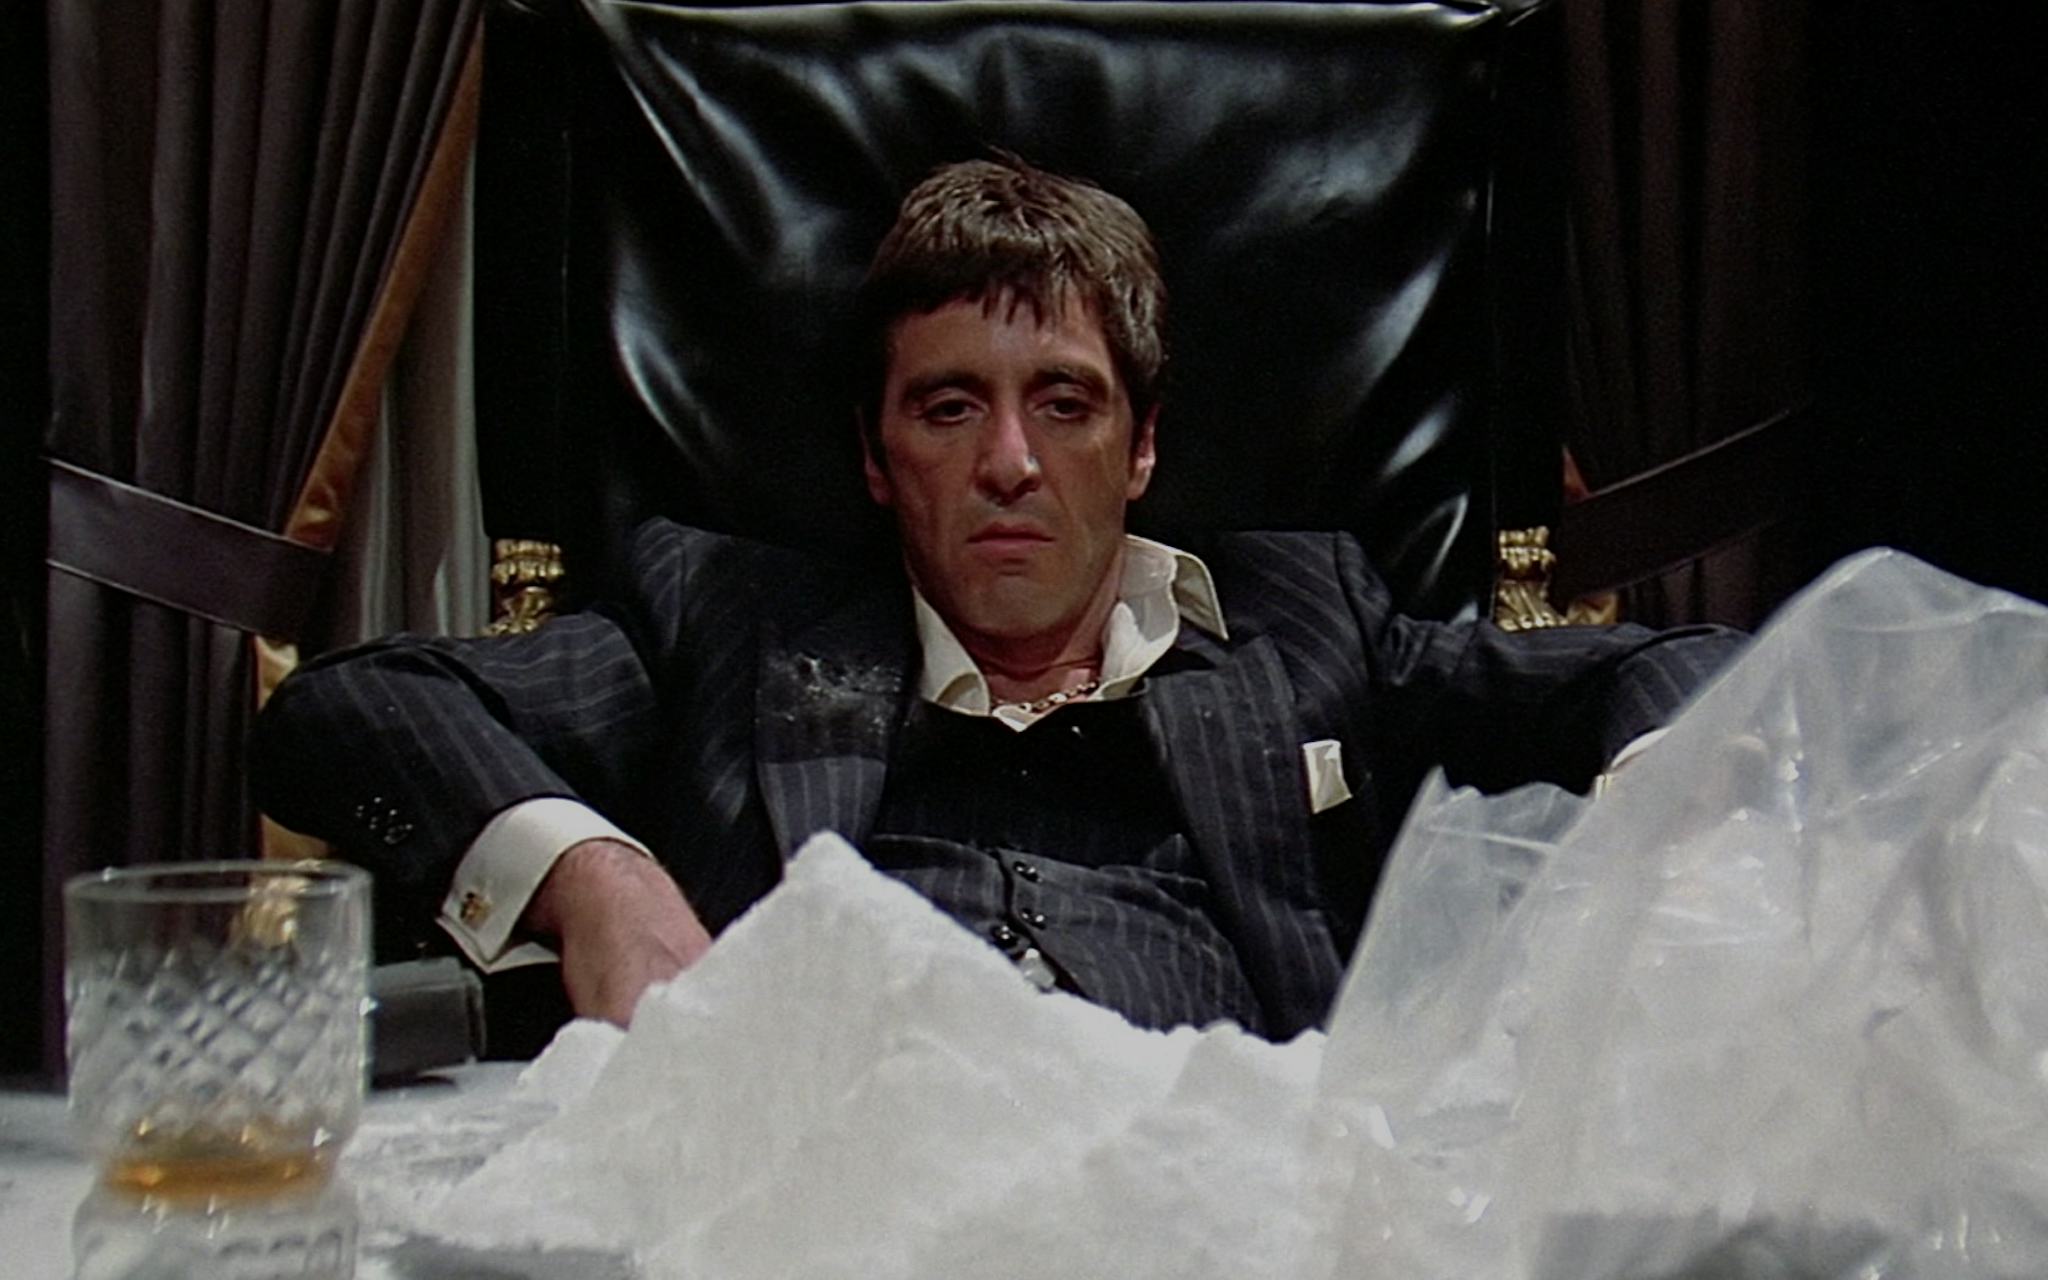 Аль Пачино лицо со шрамом кокаин